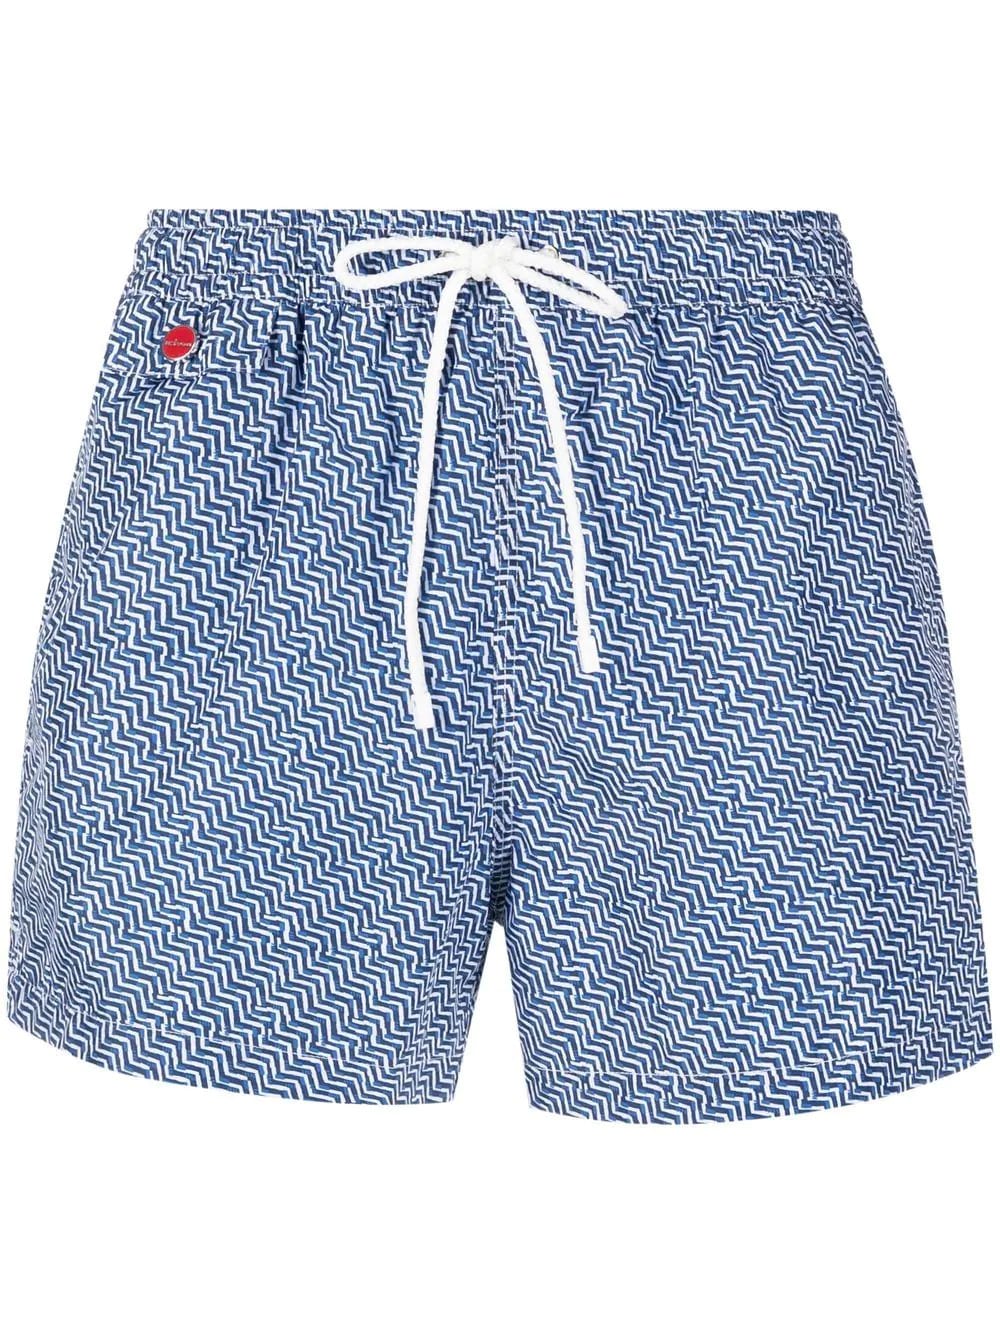 Kiton Swim Shorts With White And Navy Blue Zig Zag Print